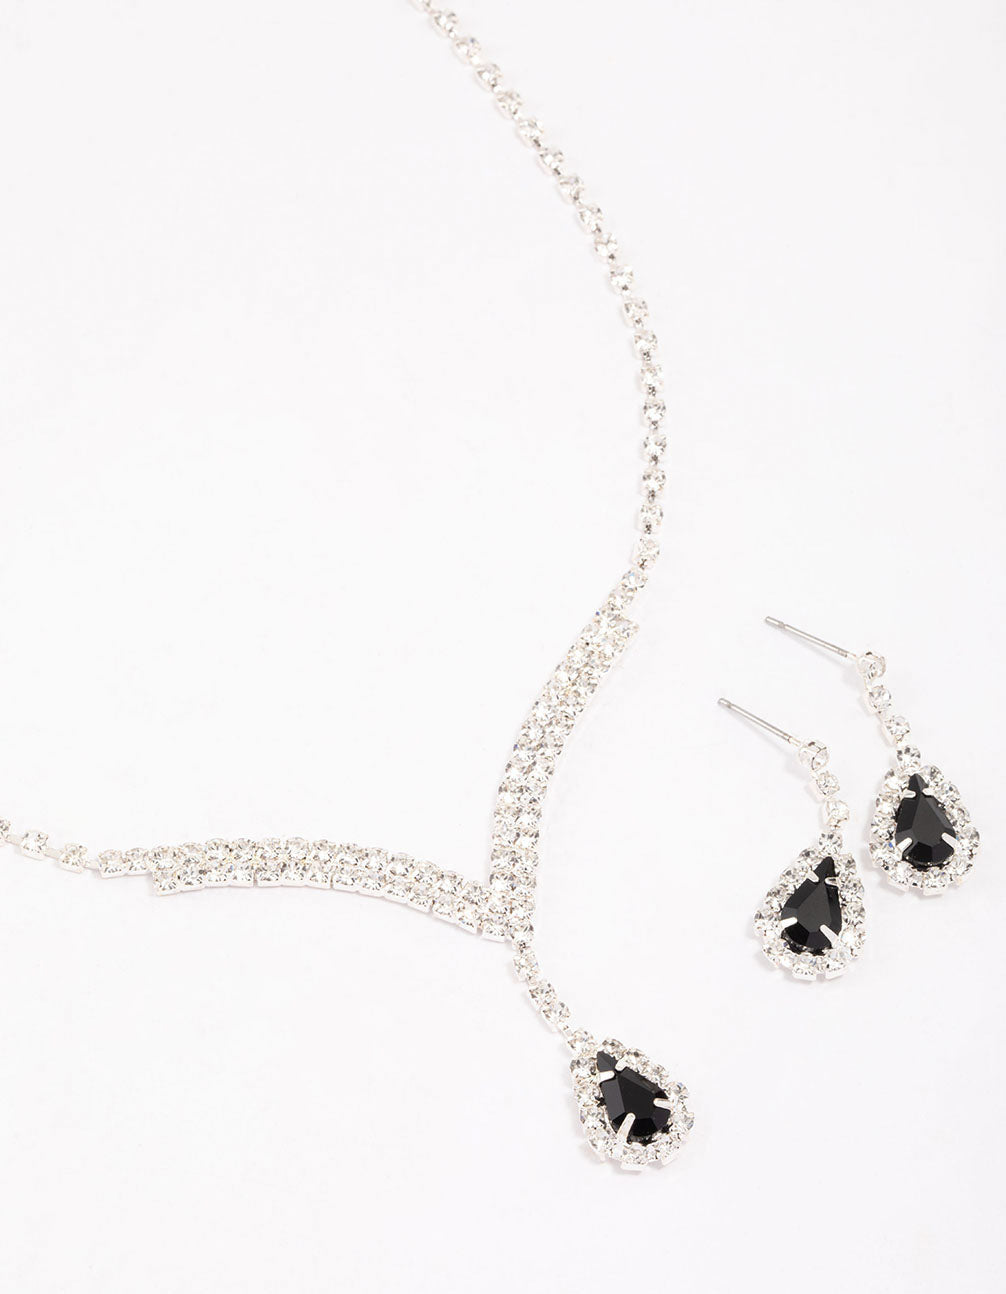 Pearl & Black Diamante crystal Necklace & earrings set wedding prom new set  | eBay